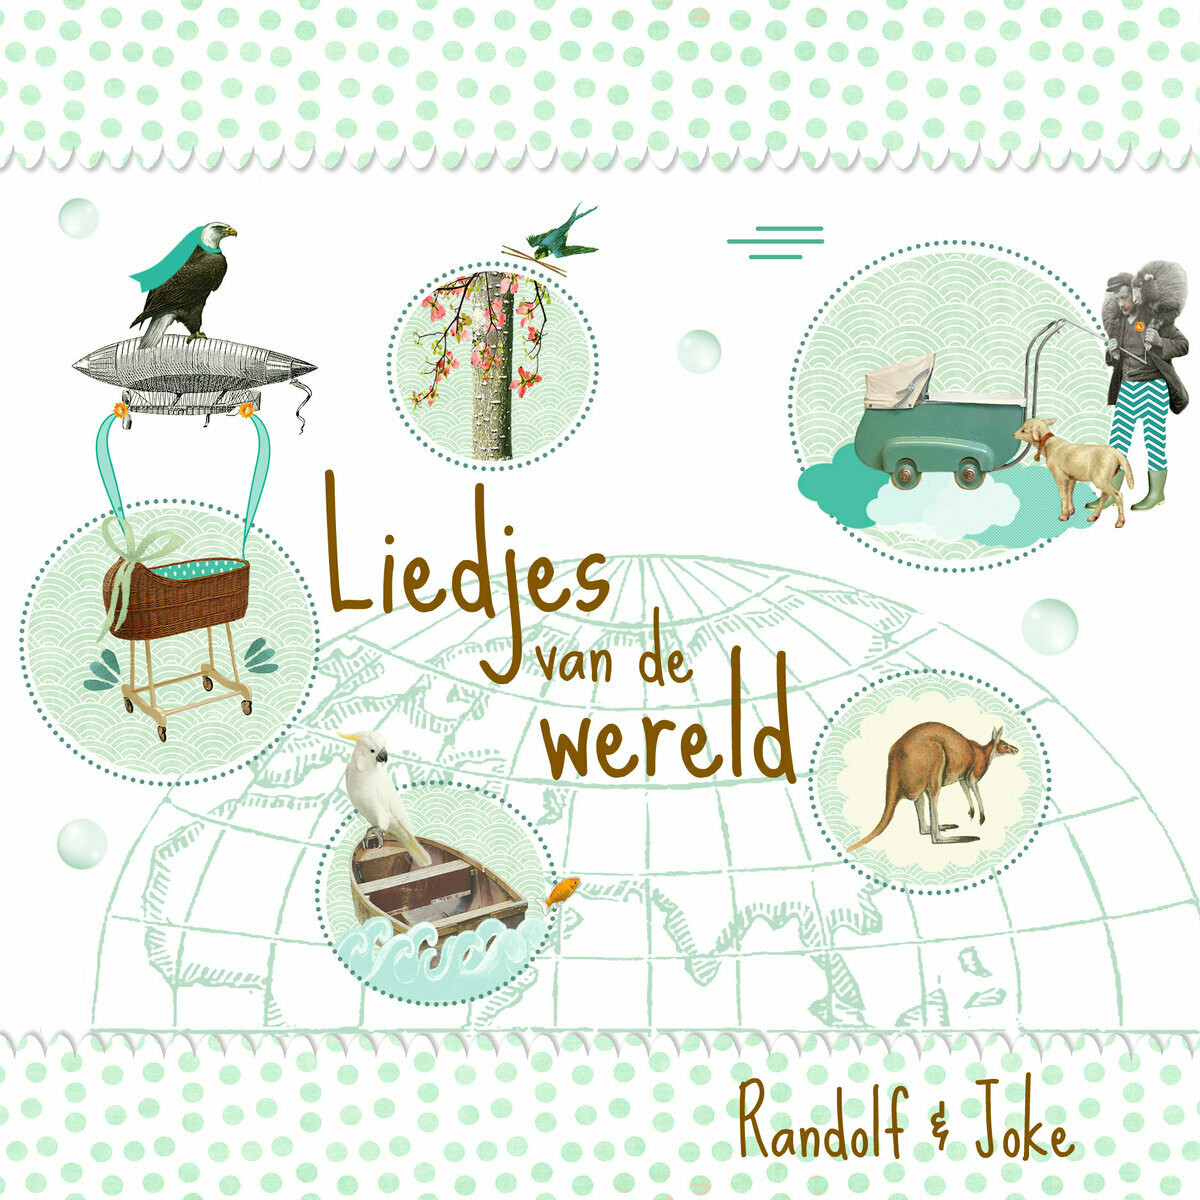 Cd Randolf & Joke: Liedjes van de wereld